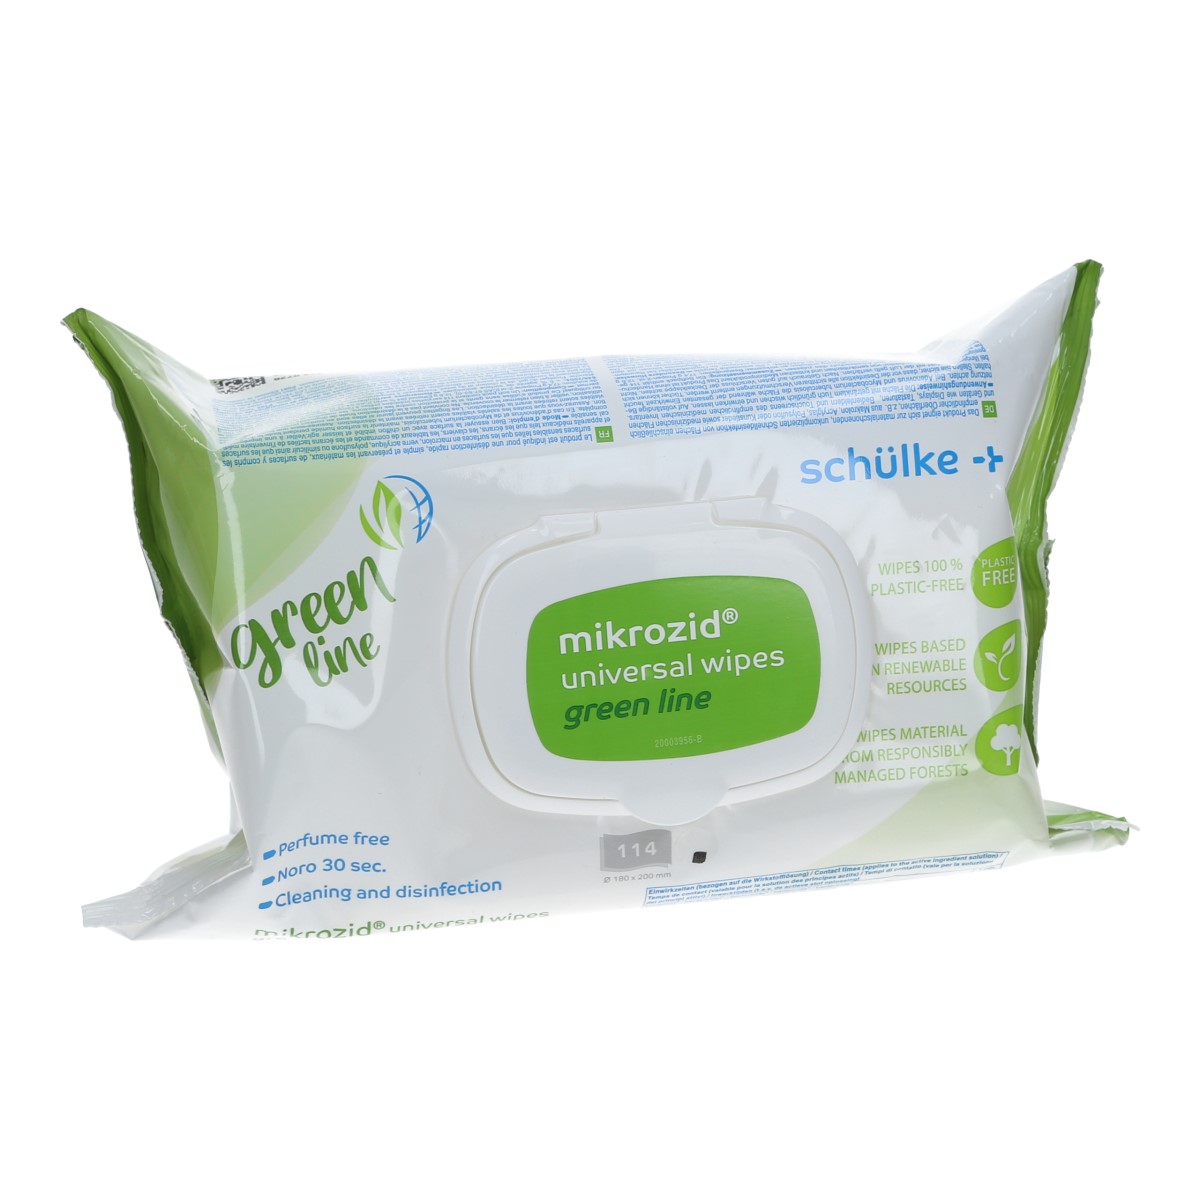 schülke mikrozid universal wipes green line premium Oberflächendesinfektion